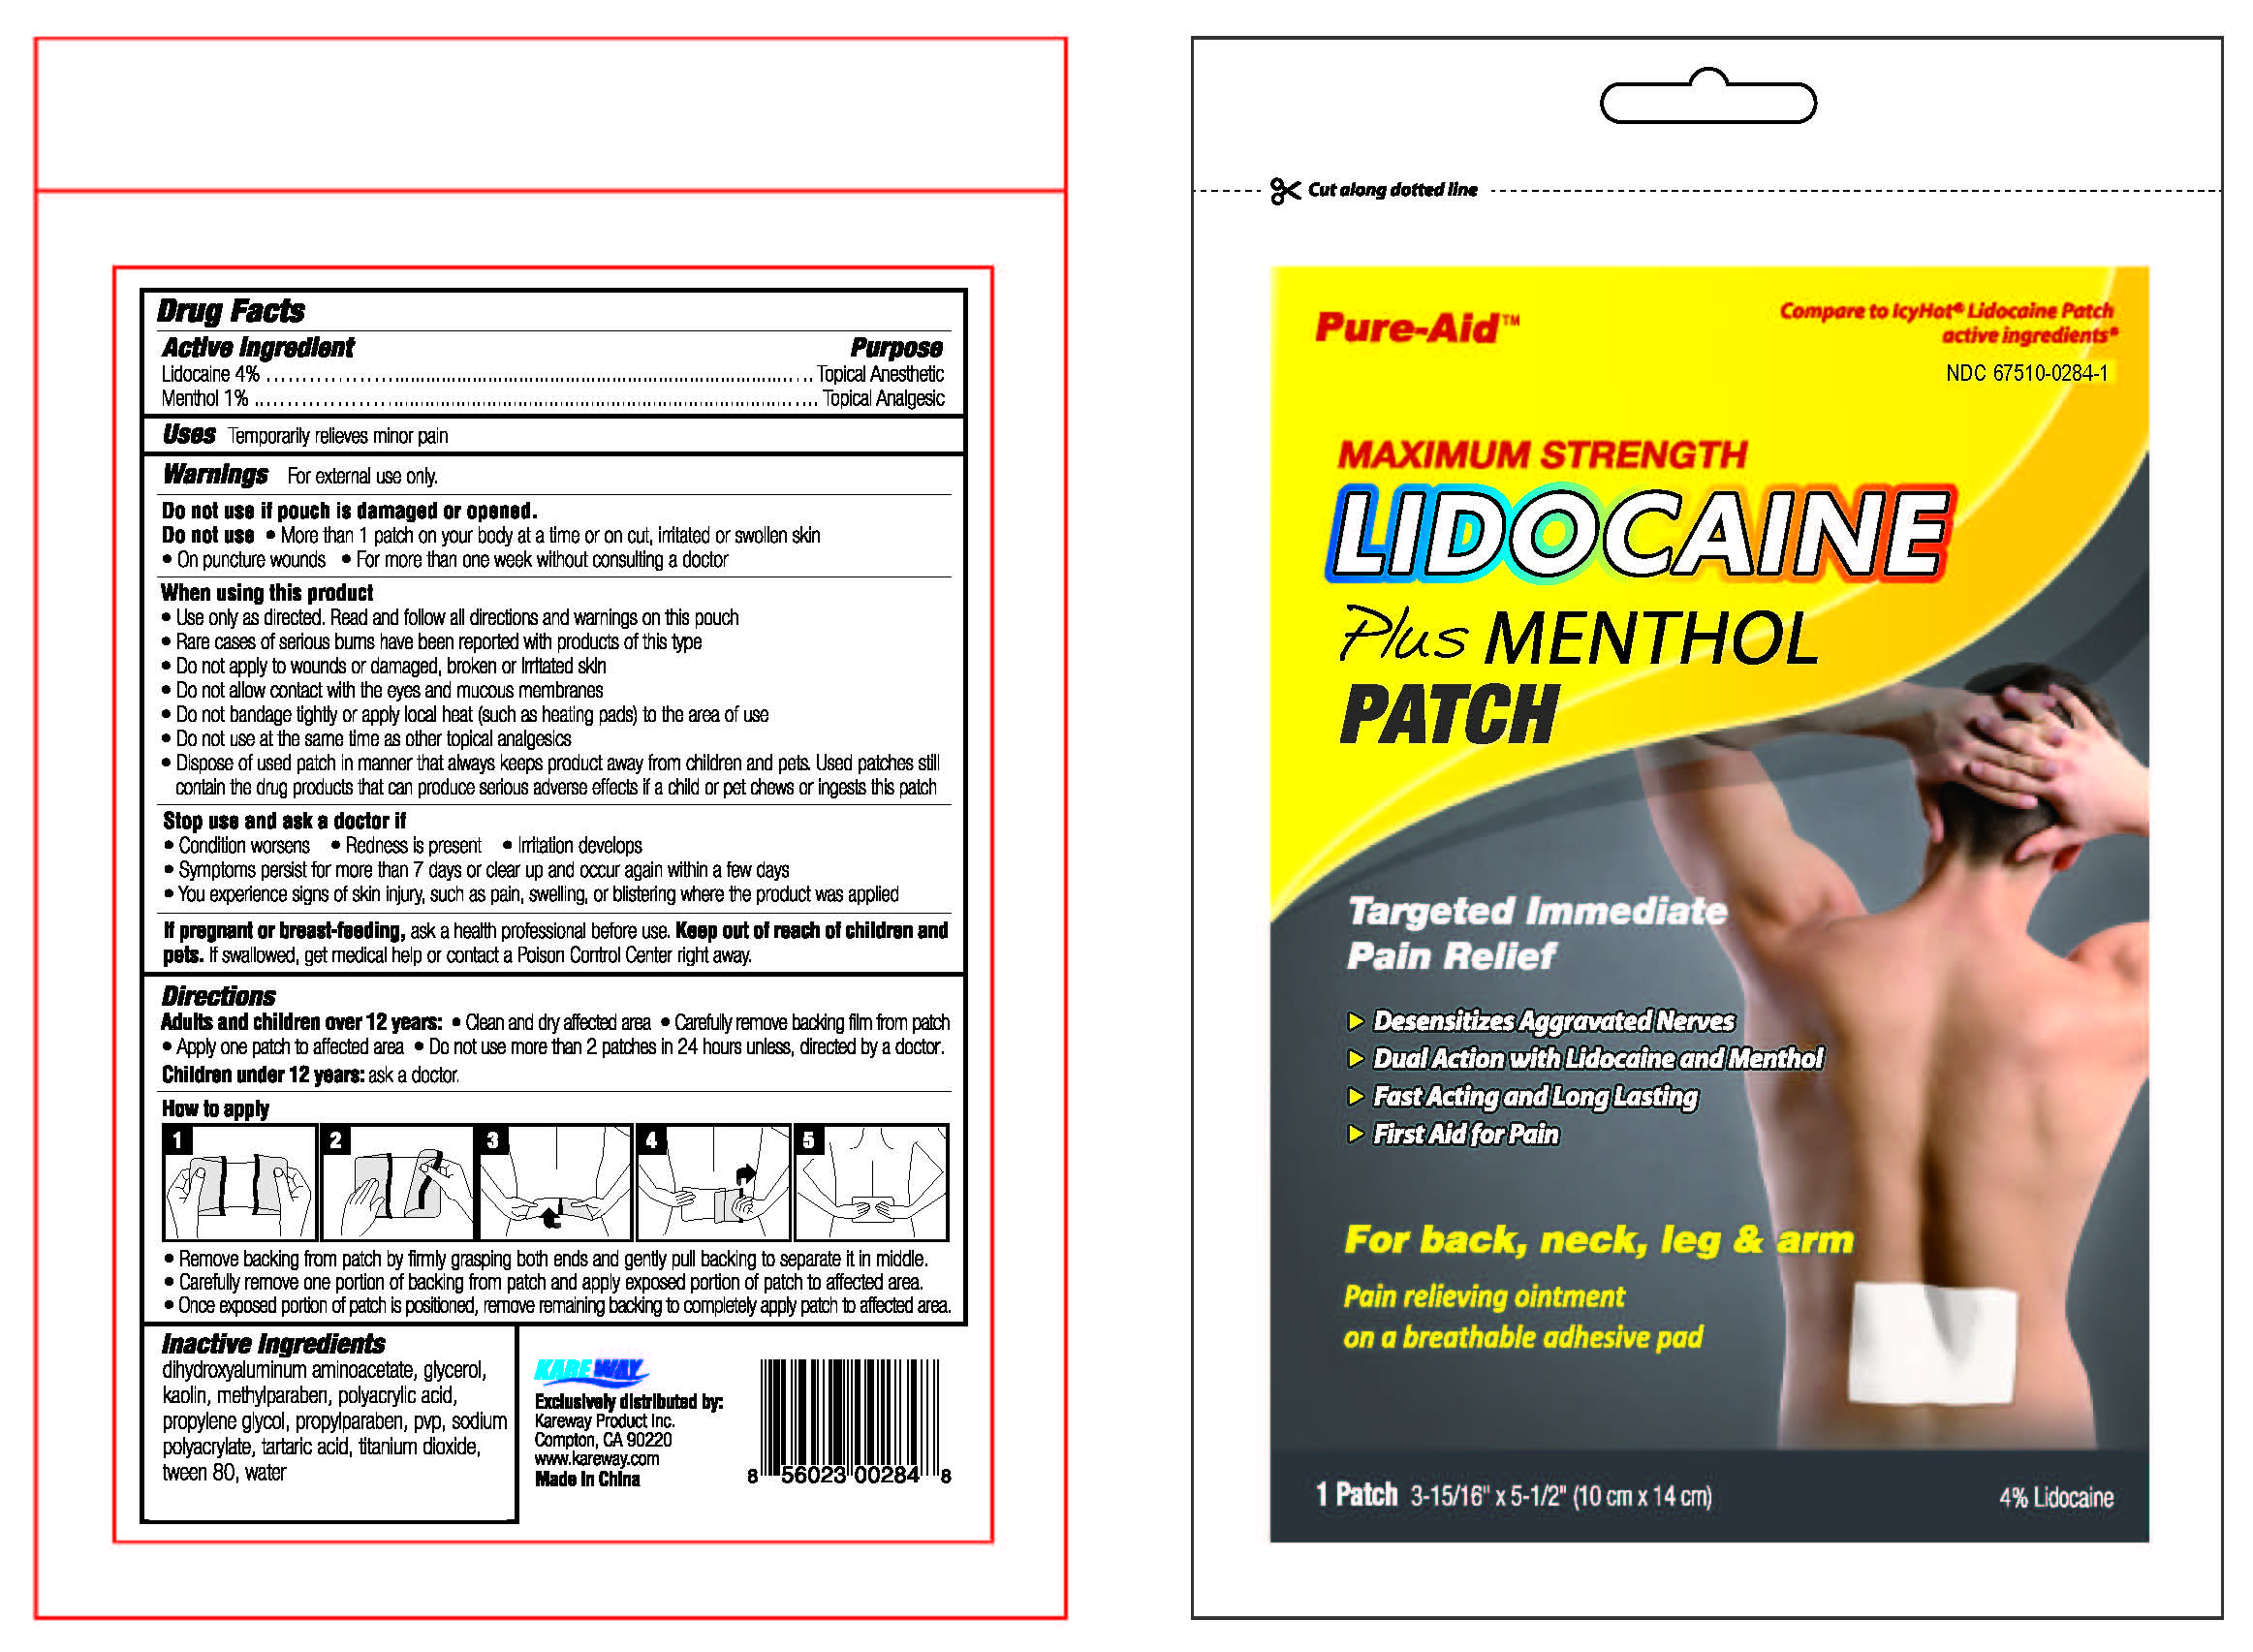 Pure-aid | Lidocaine, Menthol Patch Breastfeeding